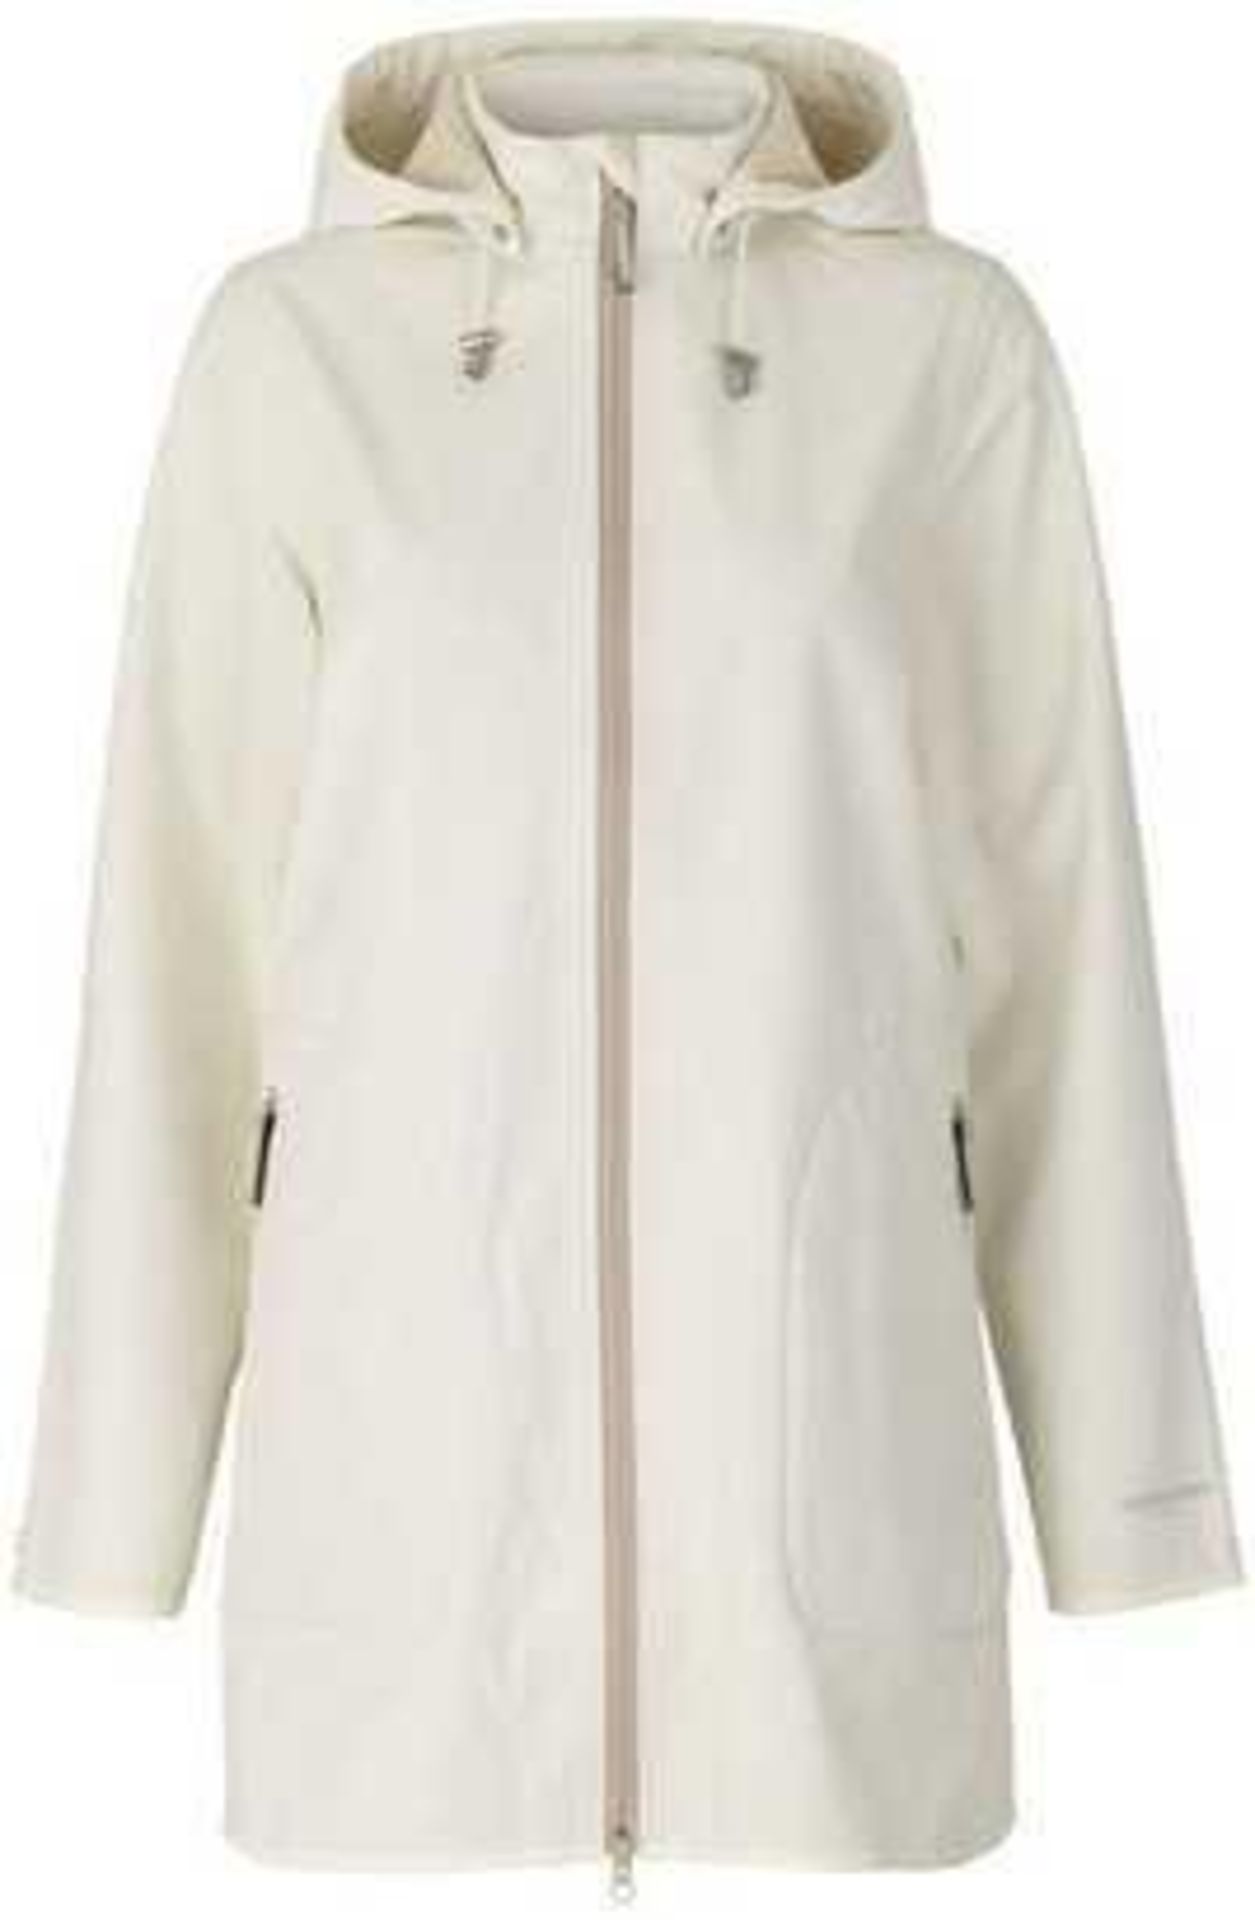 Rrp £60 Bagged Ilsie Jacobsen Honda Women'S Raincoat In White And Tan